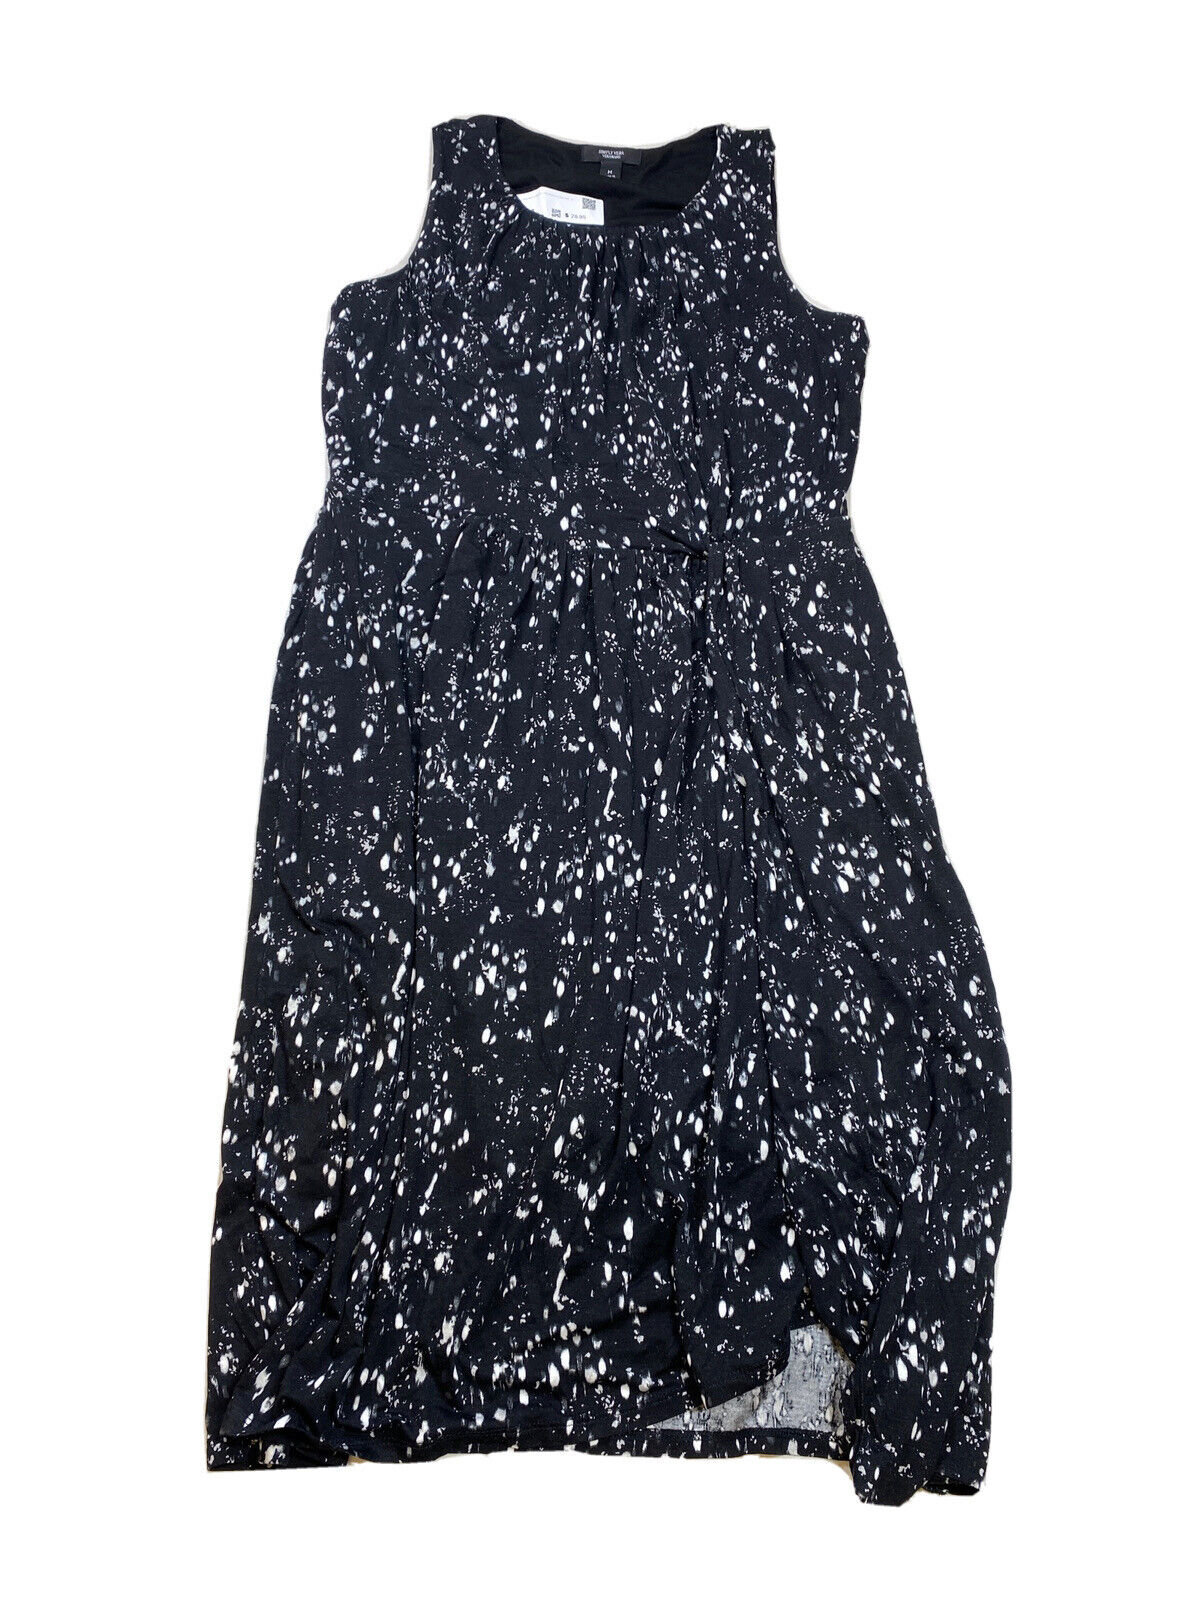 NEW Simply Vera Wang Women's Black Sleeveless Stretch Faux Wrap Dress - M